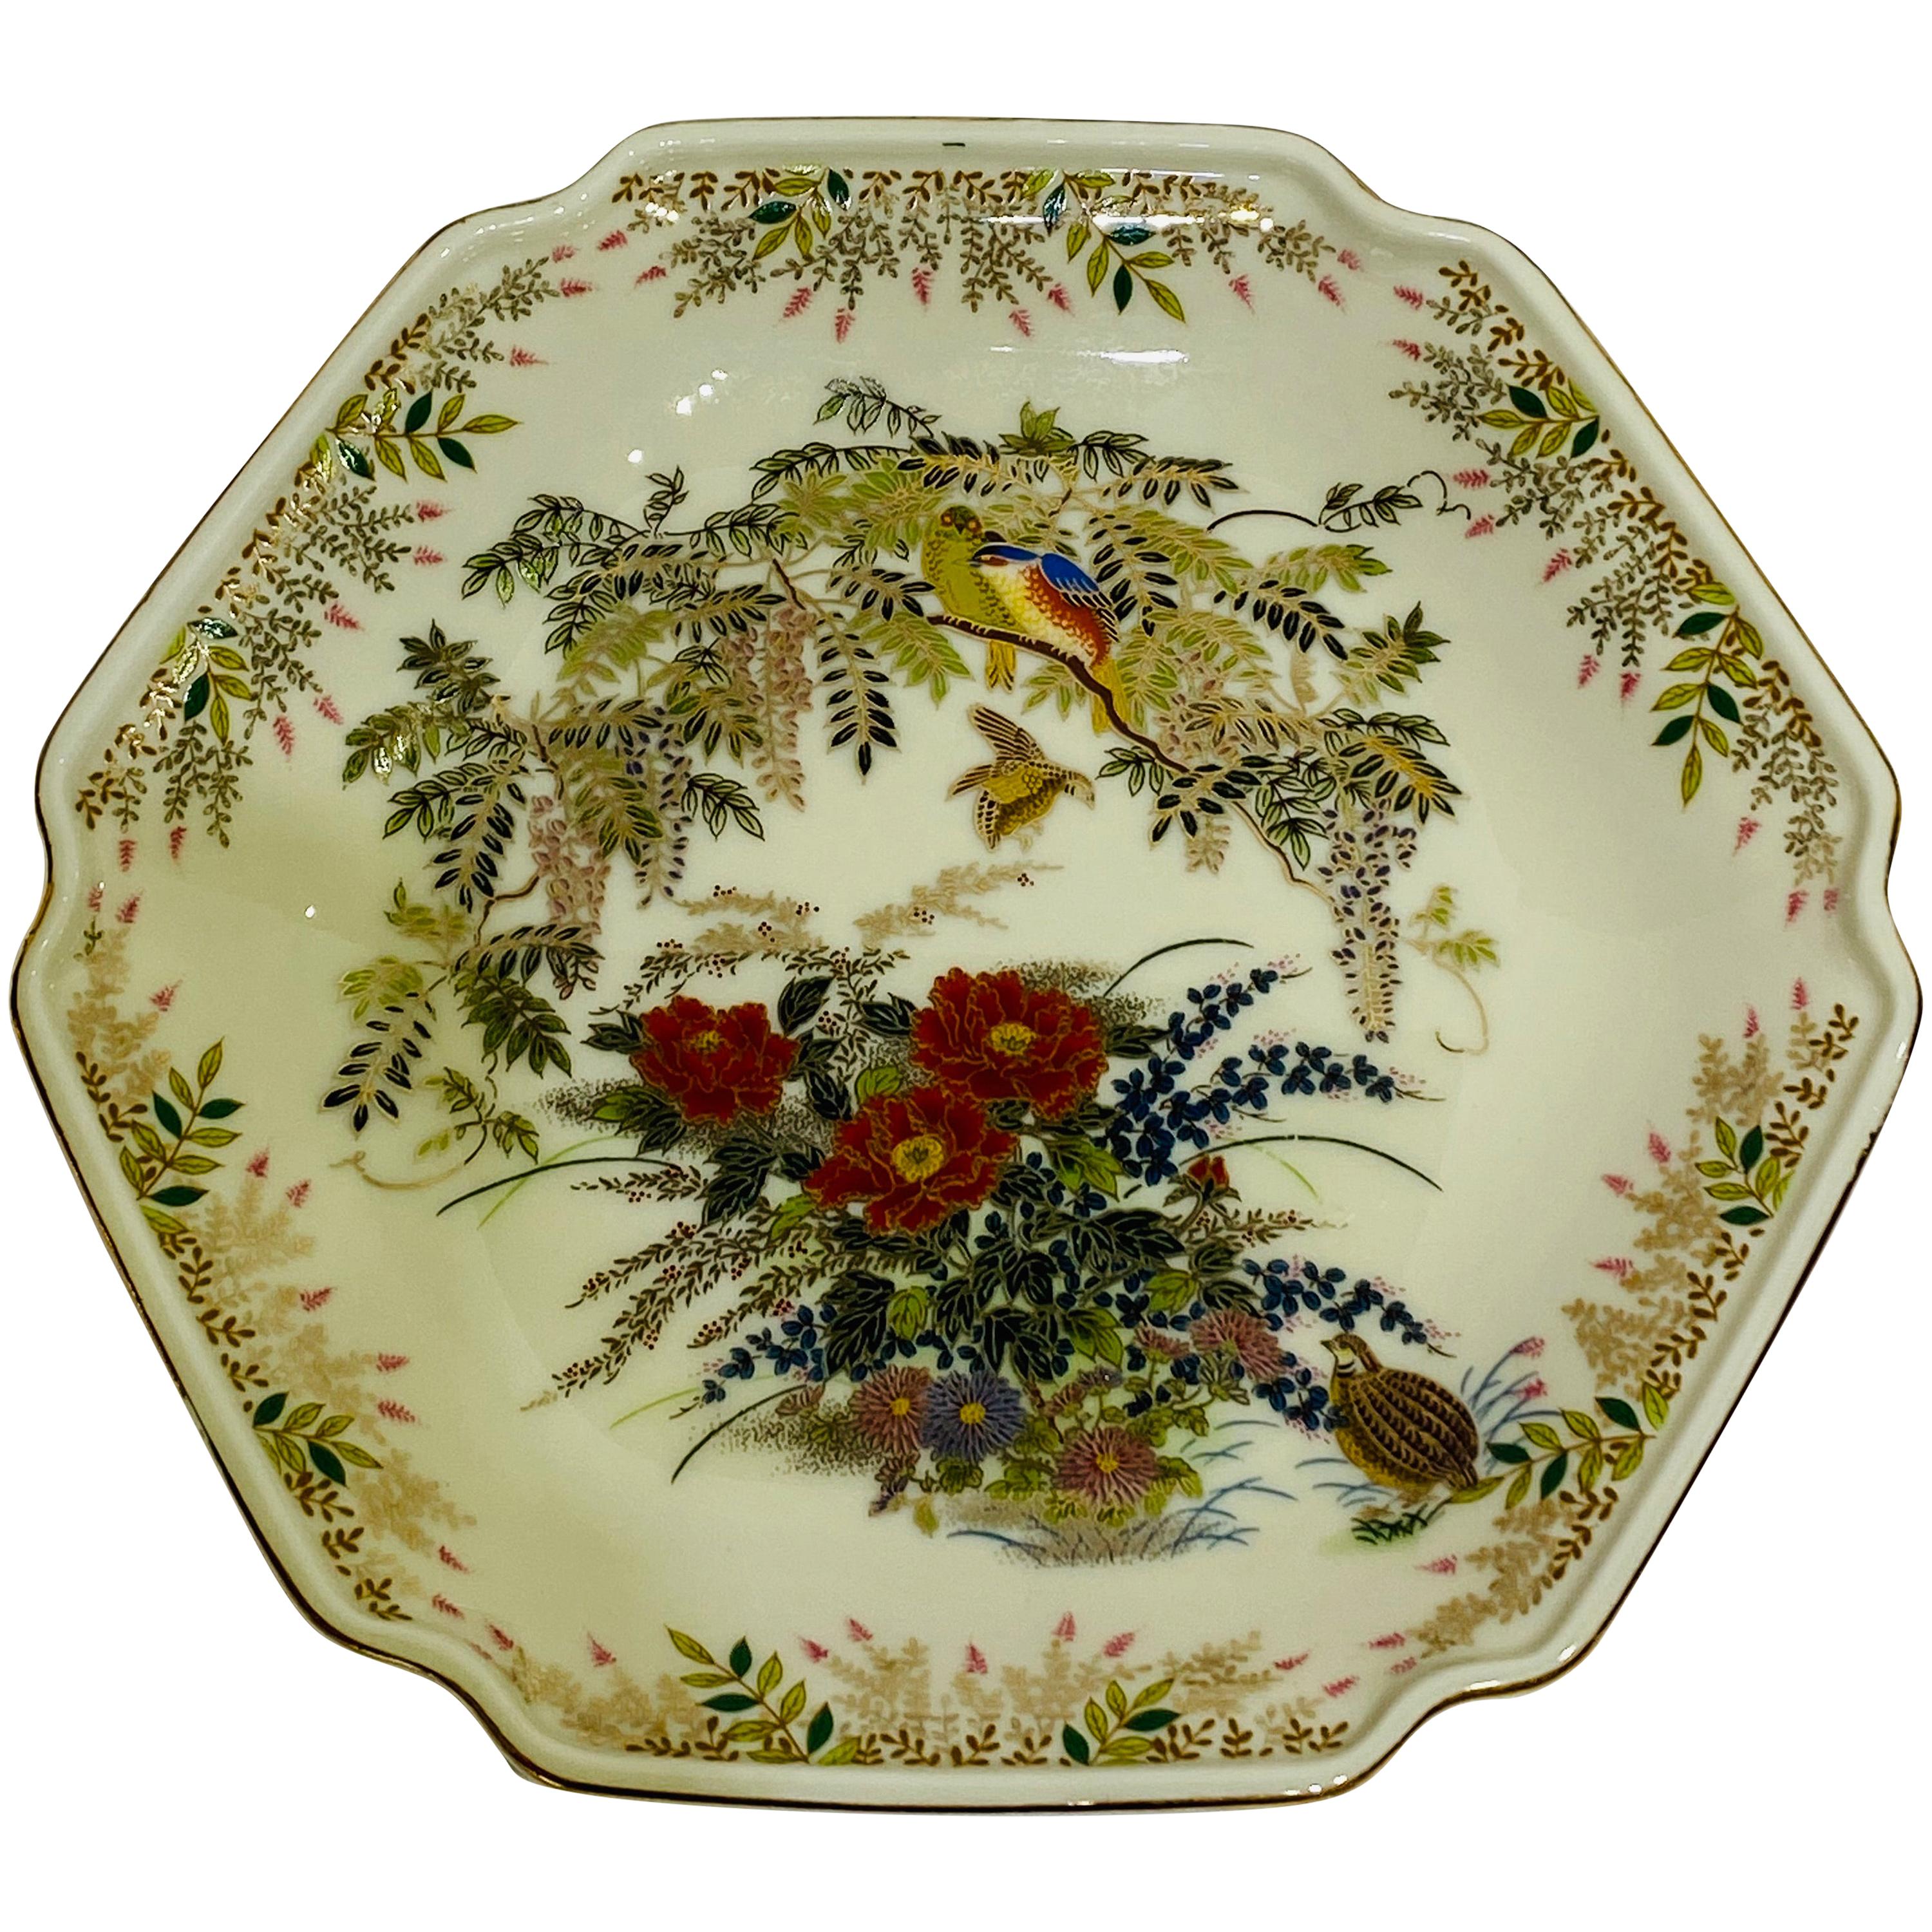 Satsuma Japan Porcelain and Paint Decorative China Plate 